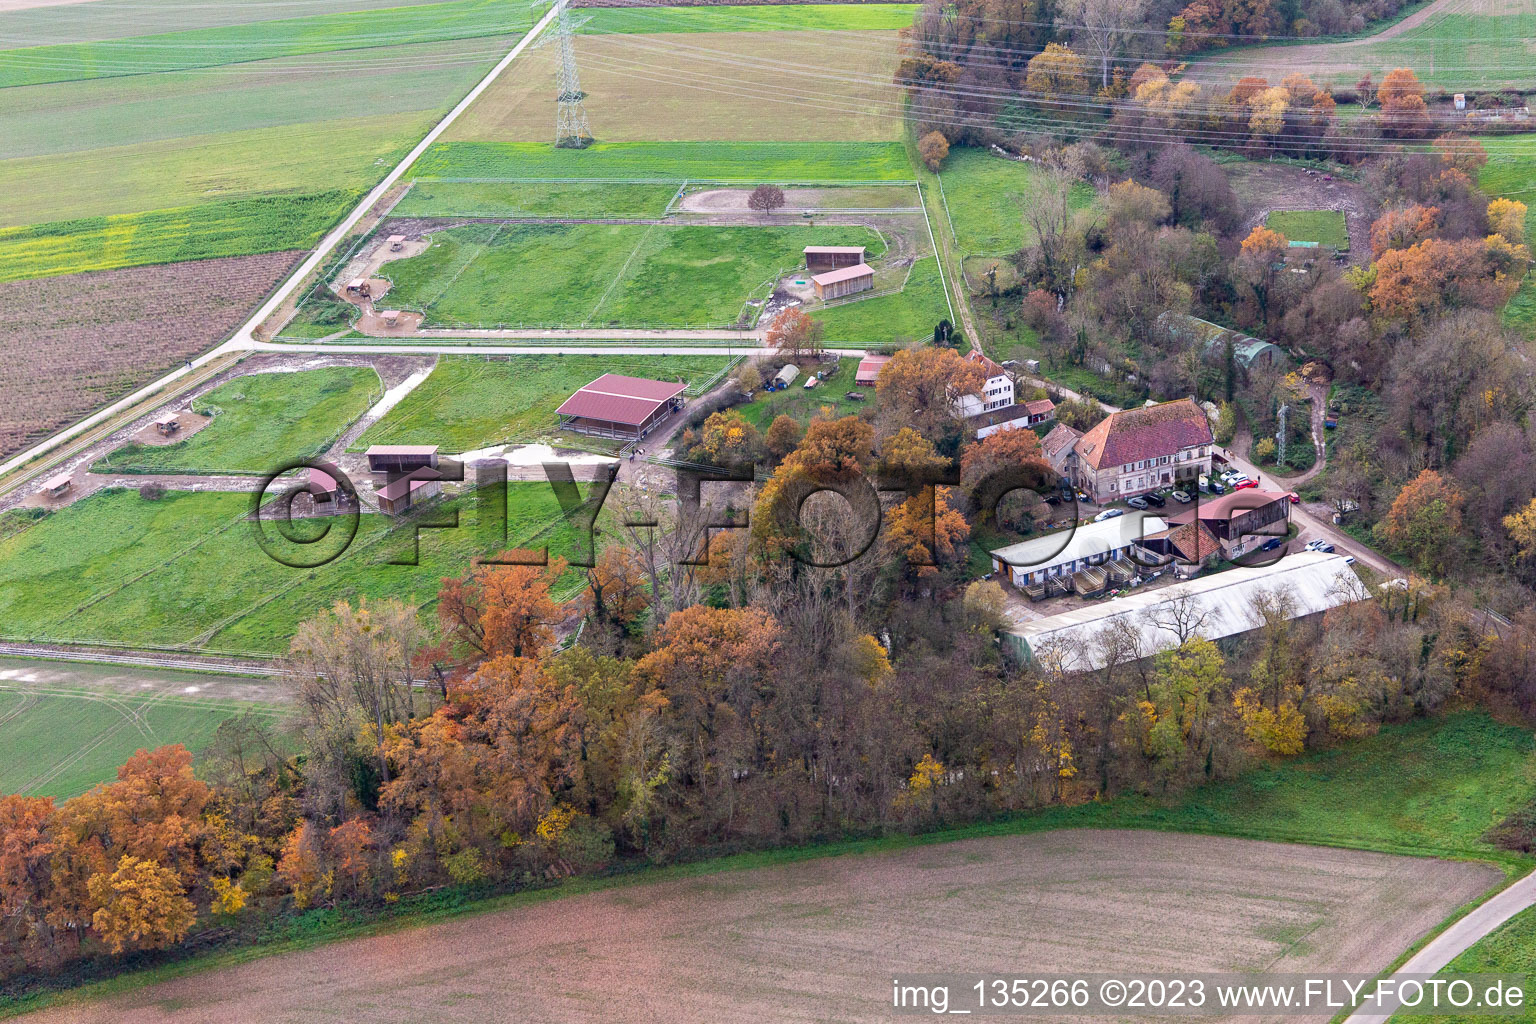 Wanzheim Mill in Rheinzabern in the state Rhineland-Palatinate, Germany